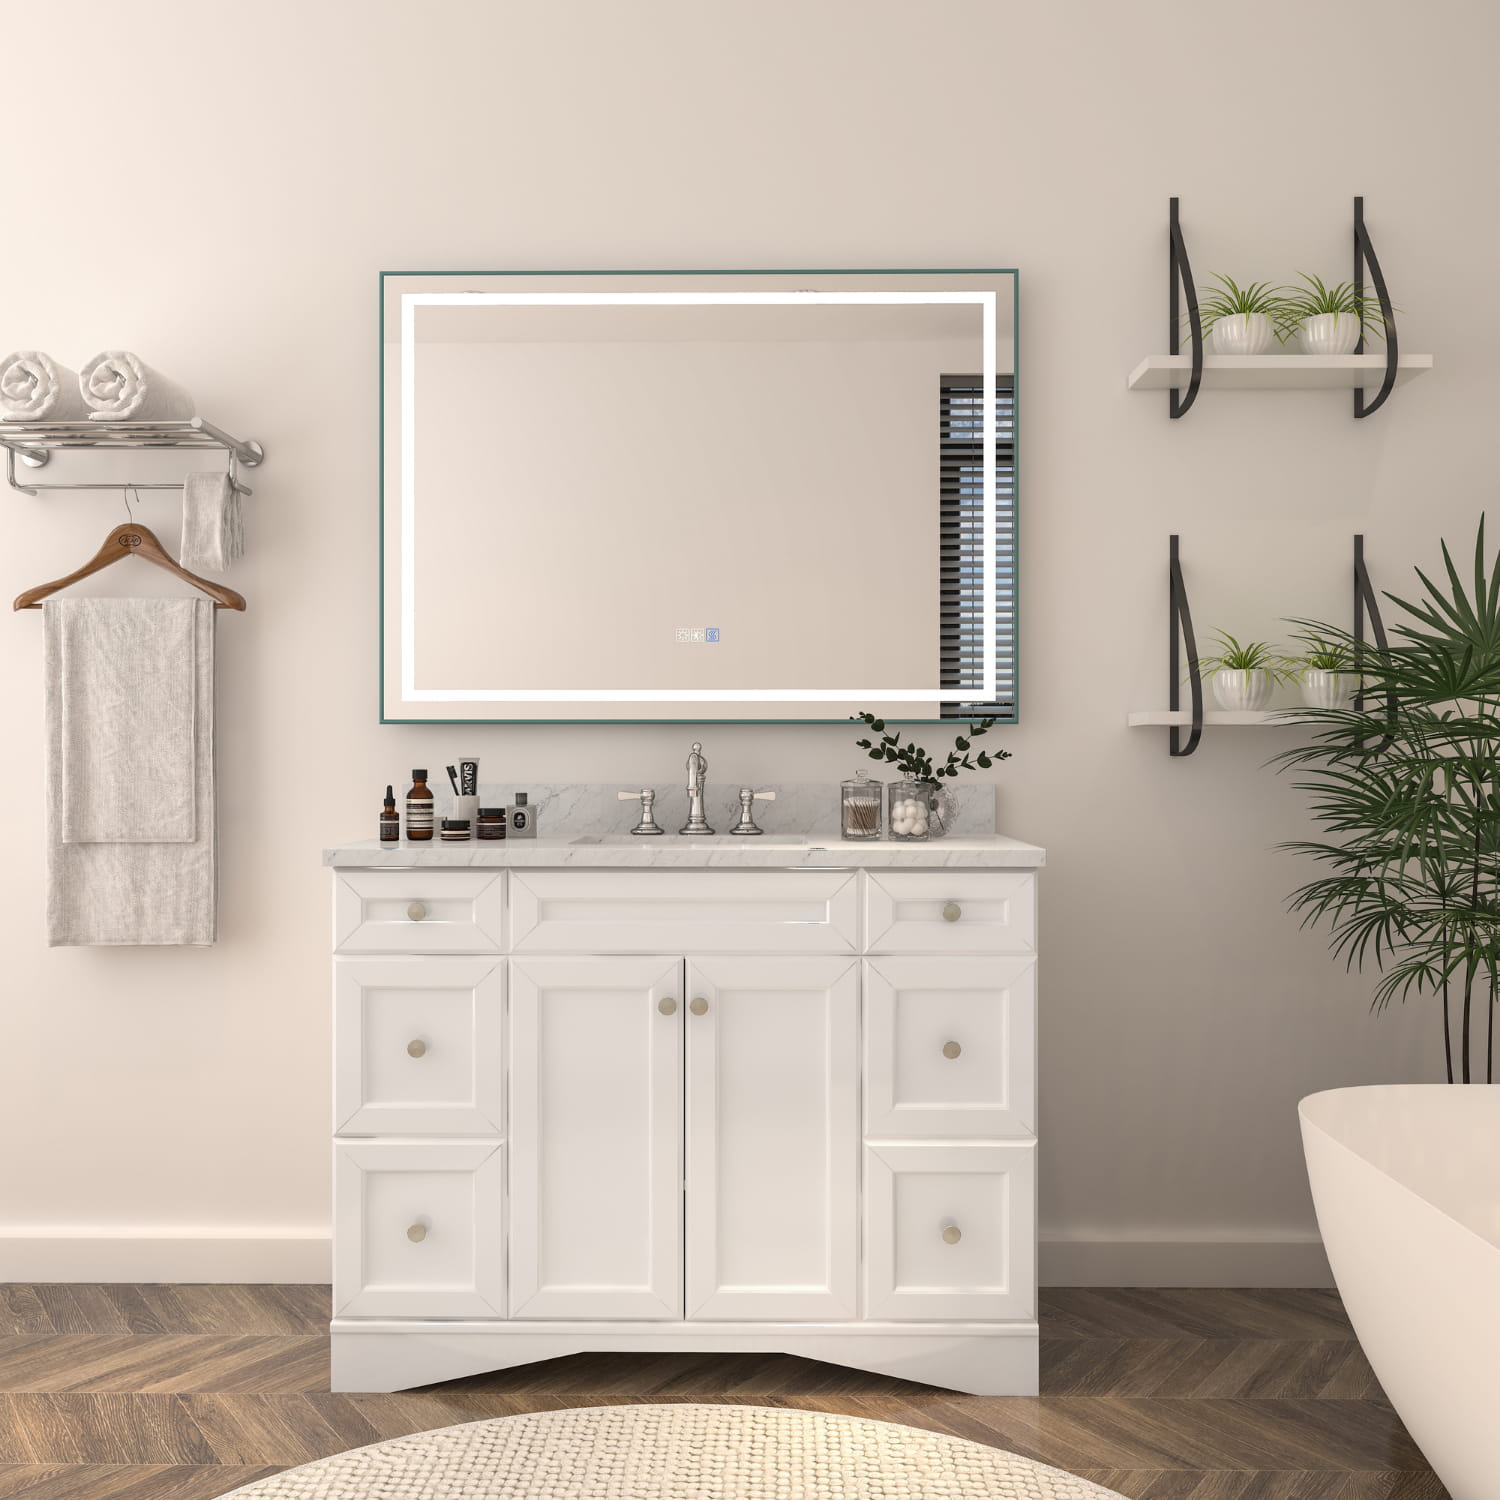 CASAINC 48" x 36" Dimmable LED Bathroom Mirror with Anti Fog, Adjustable Light Color And Touch Sensors-CASAINC